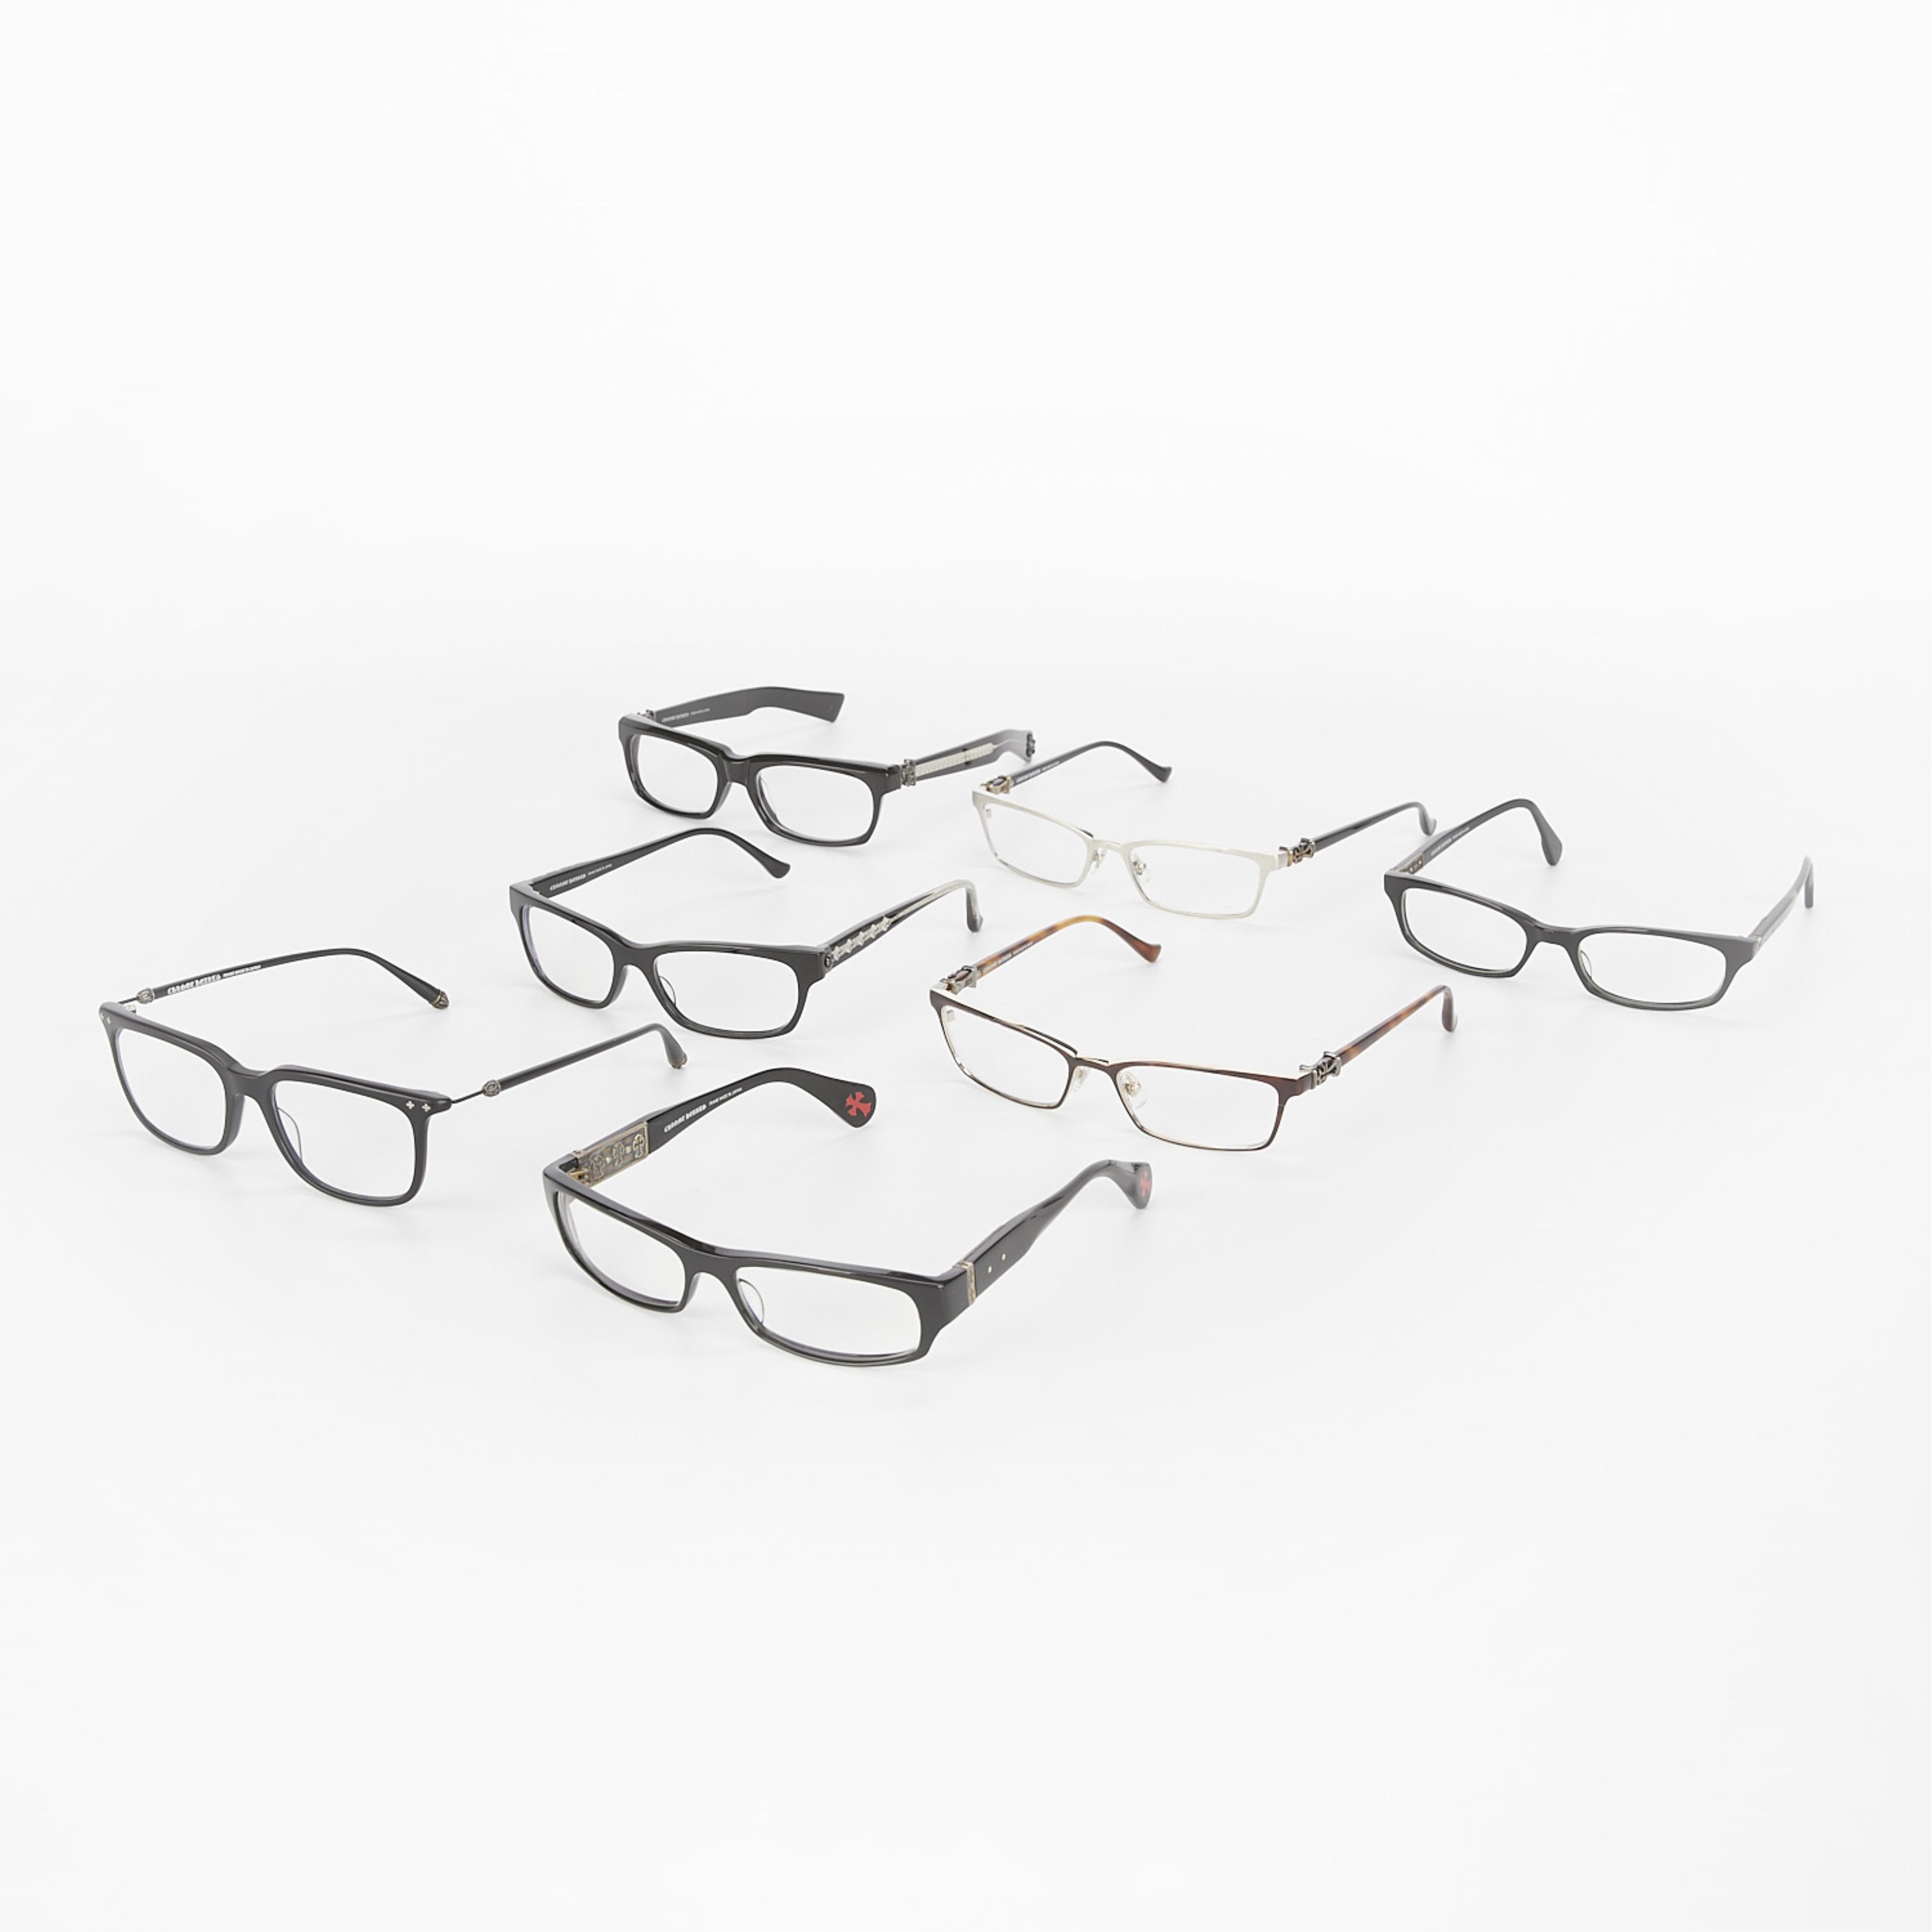 Grp of 7 Chrome Hearts Eyeglasses - Image 3 of 15